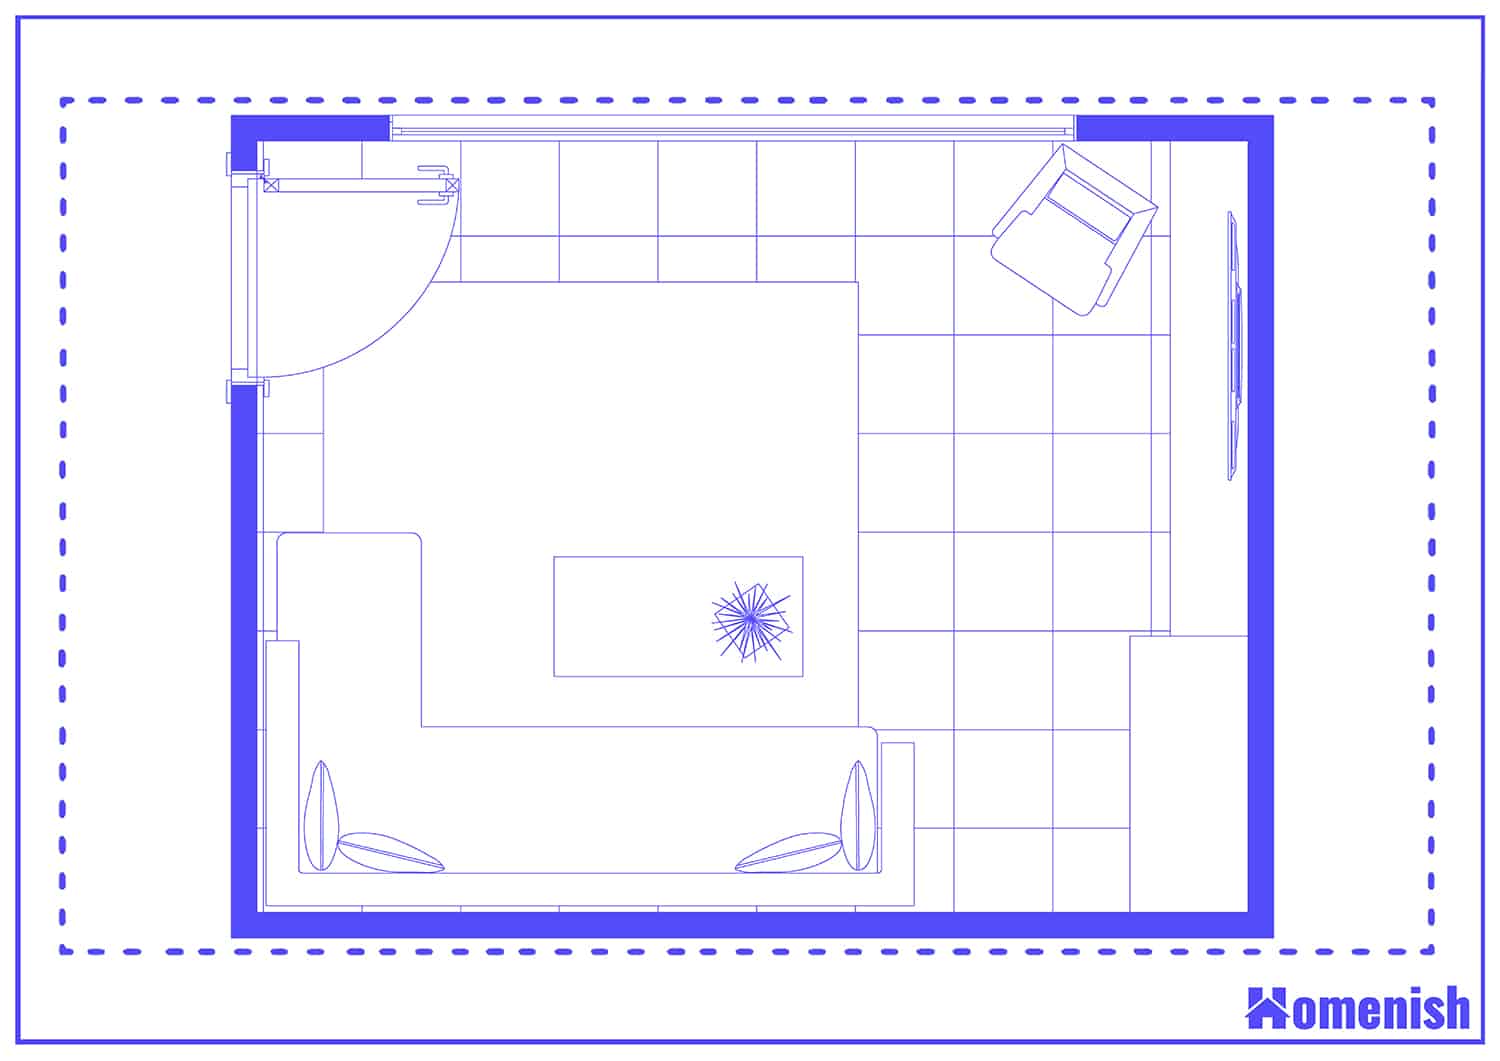 L-shaped Sofa in Entertainment Living Room Floor Plan